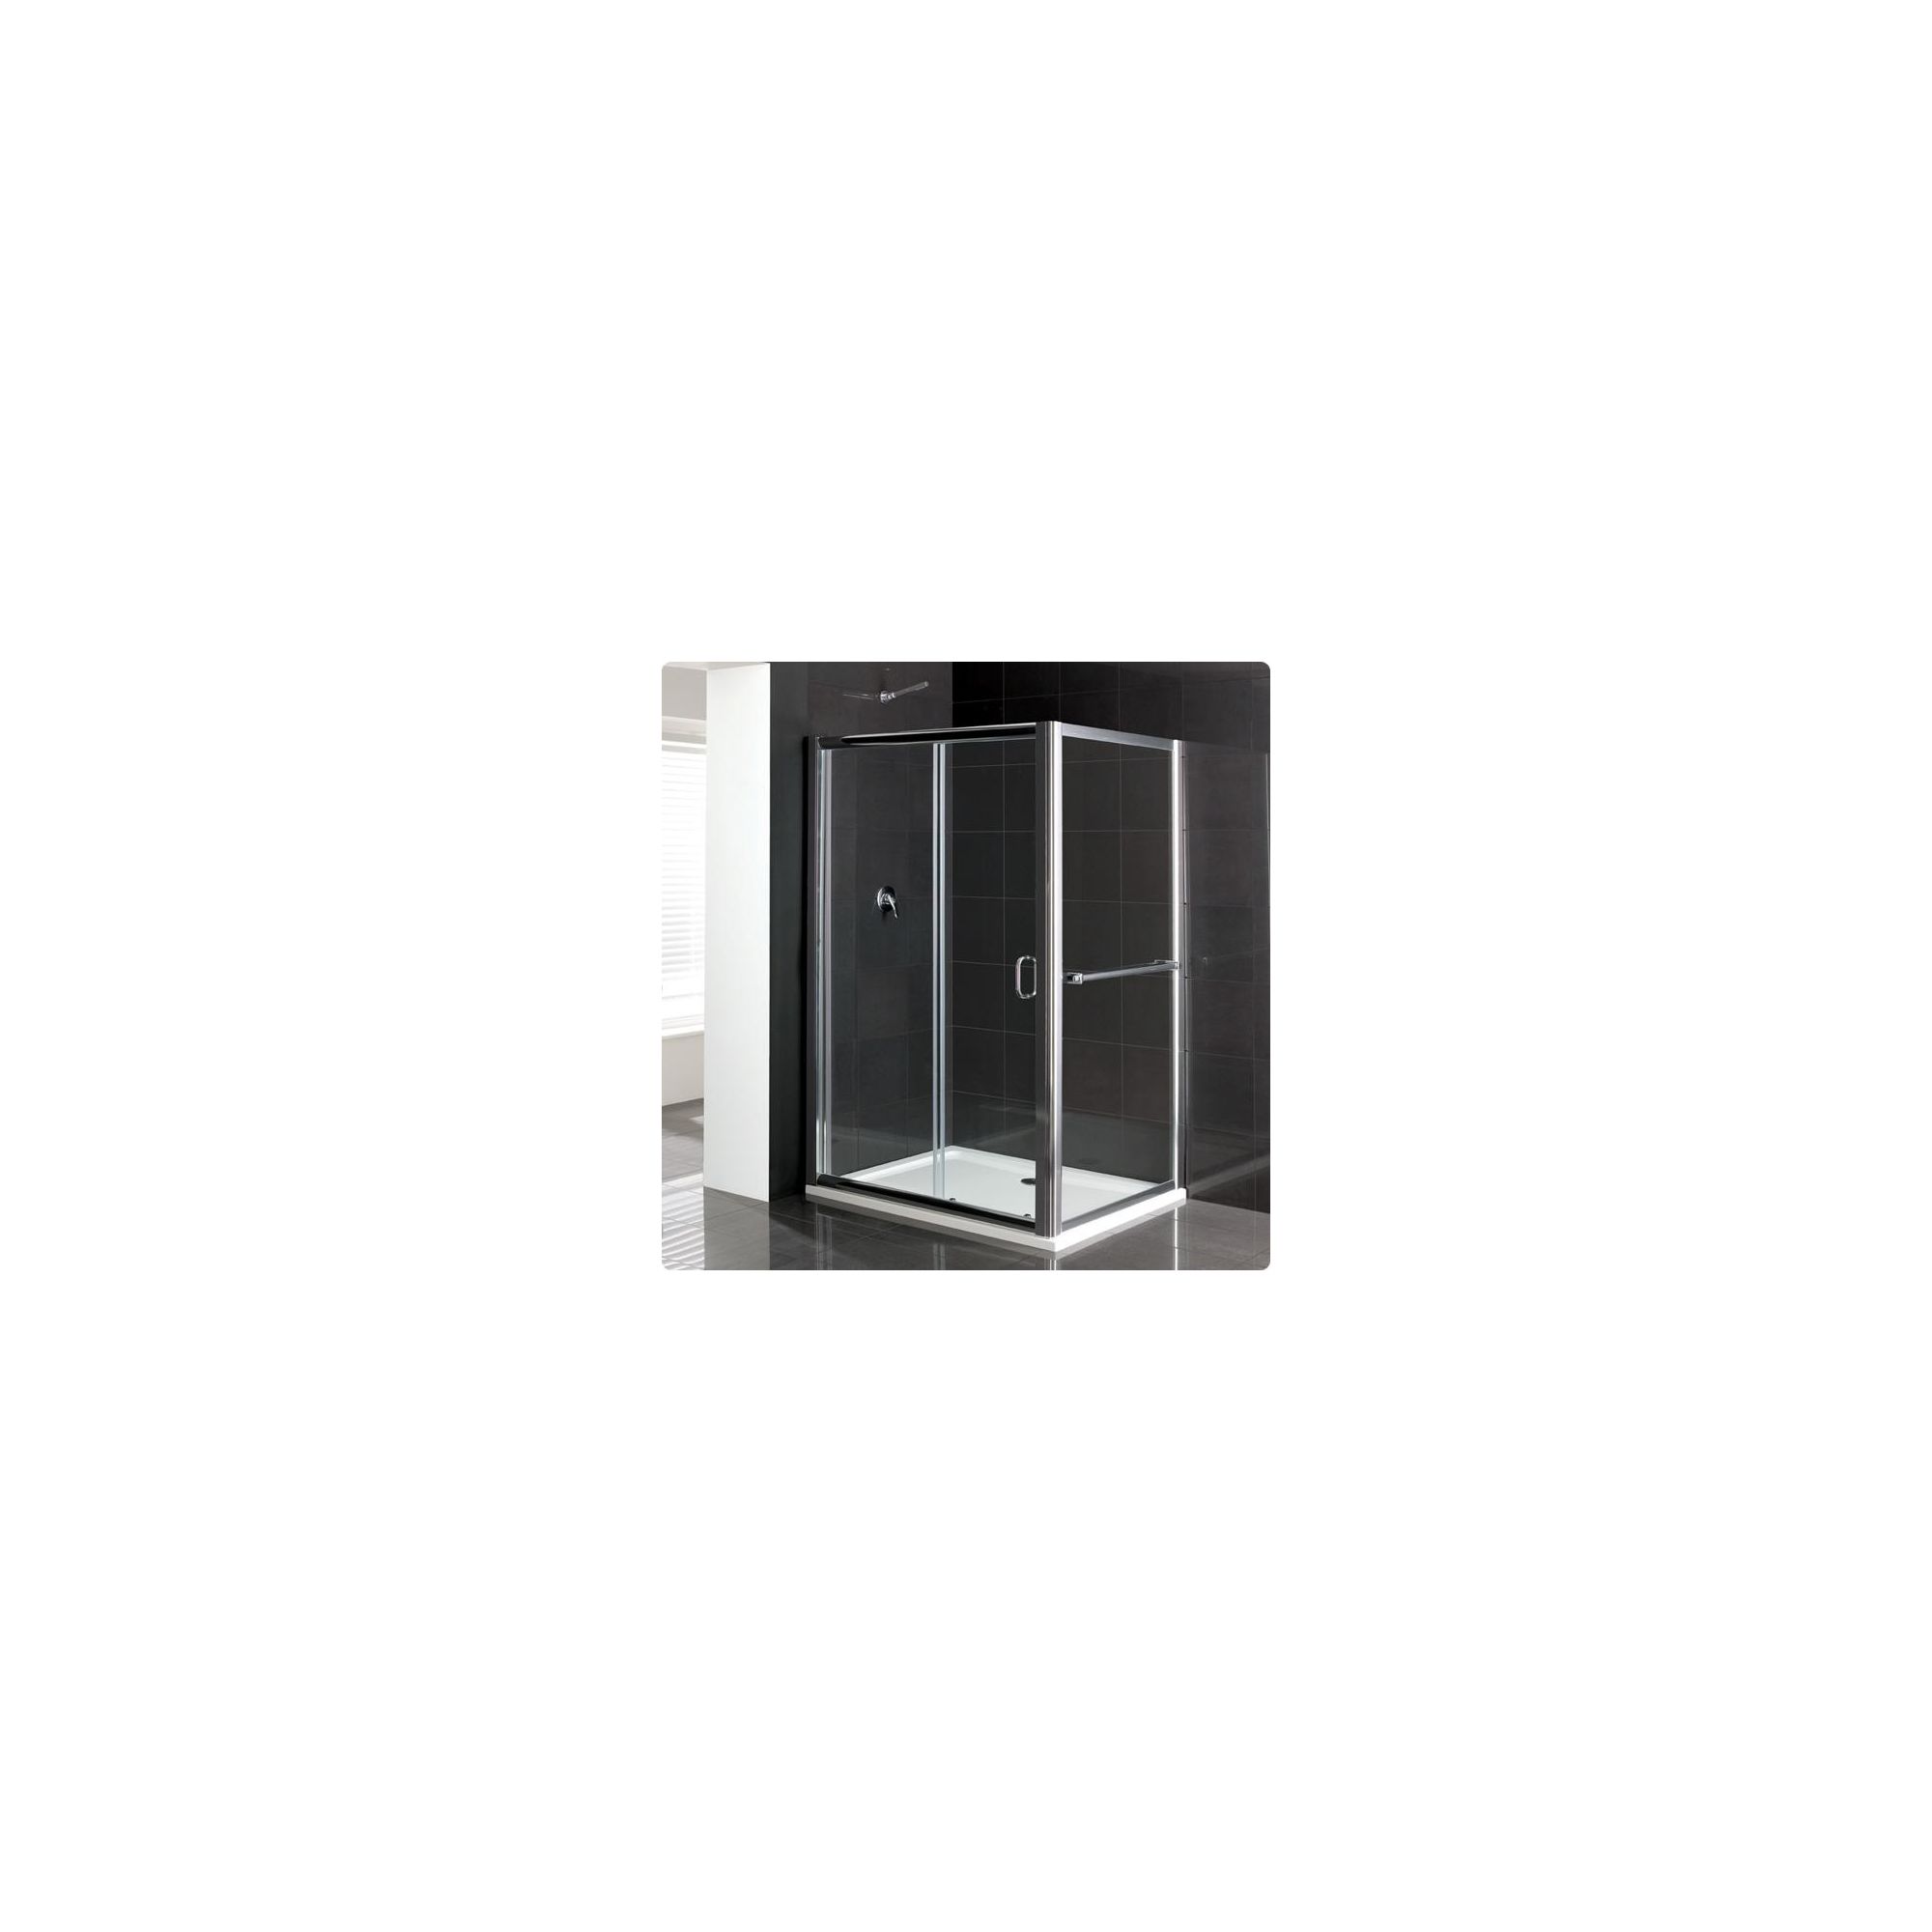 Duchy Elite Silver Sliding Door Shower Enclosure, 1000mm x 800mm, Standard Tray, 6mm Glass at Tesco Direct